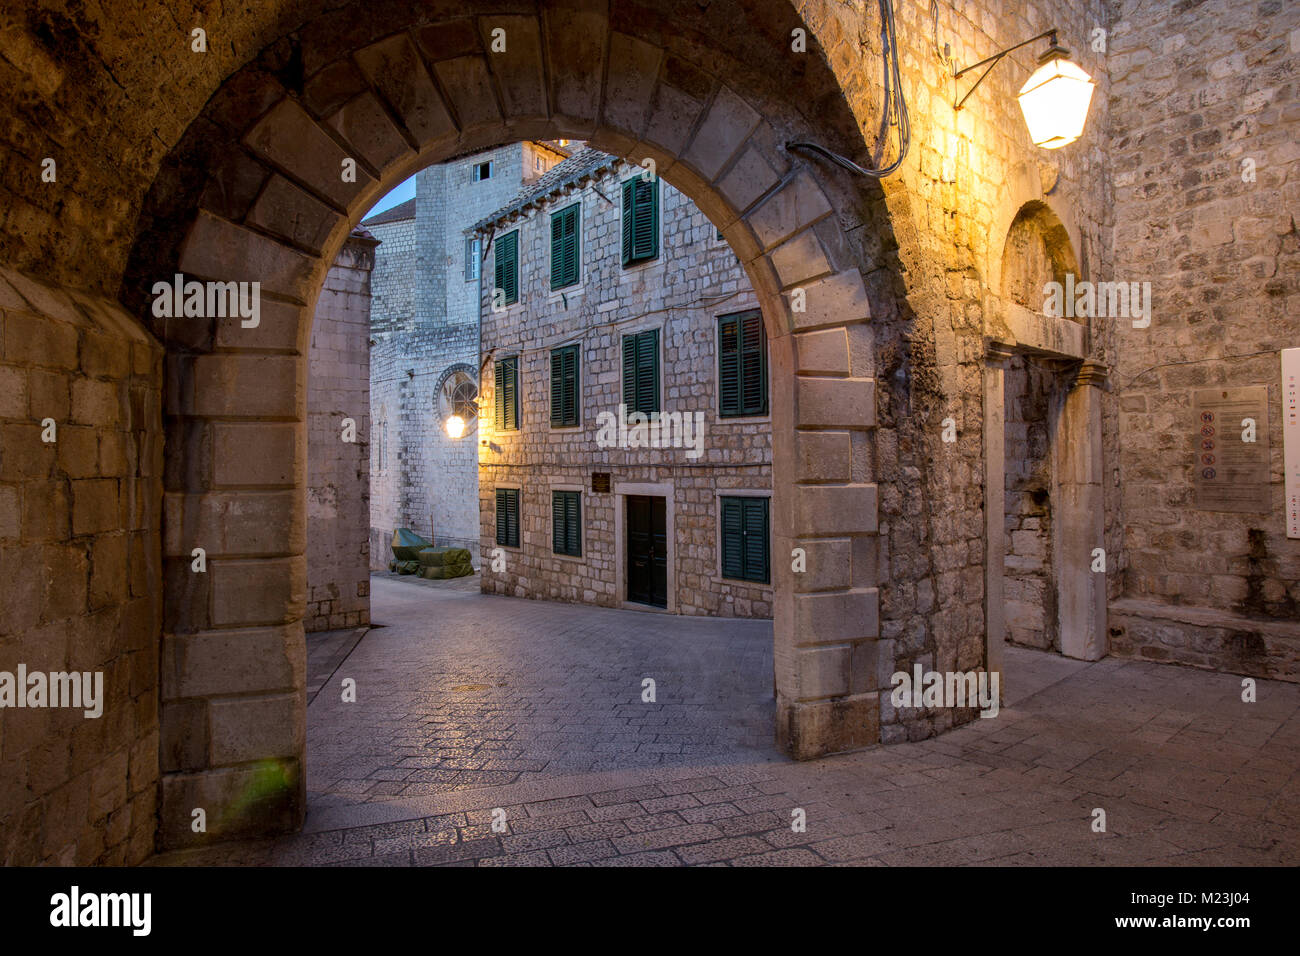 Dubrovnik castle walls, Croatia Stock Photo